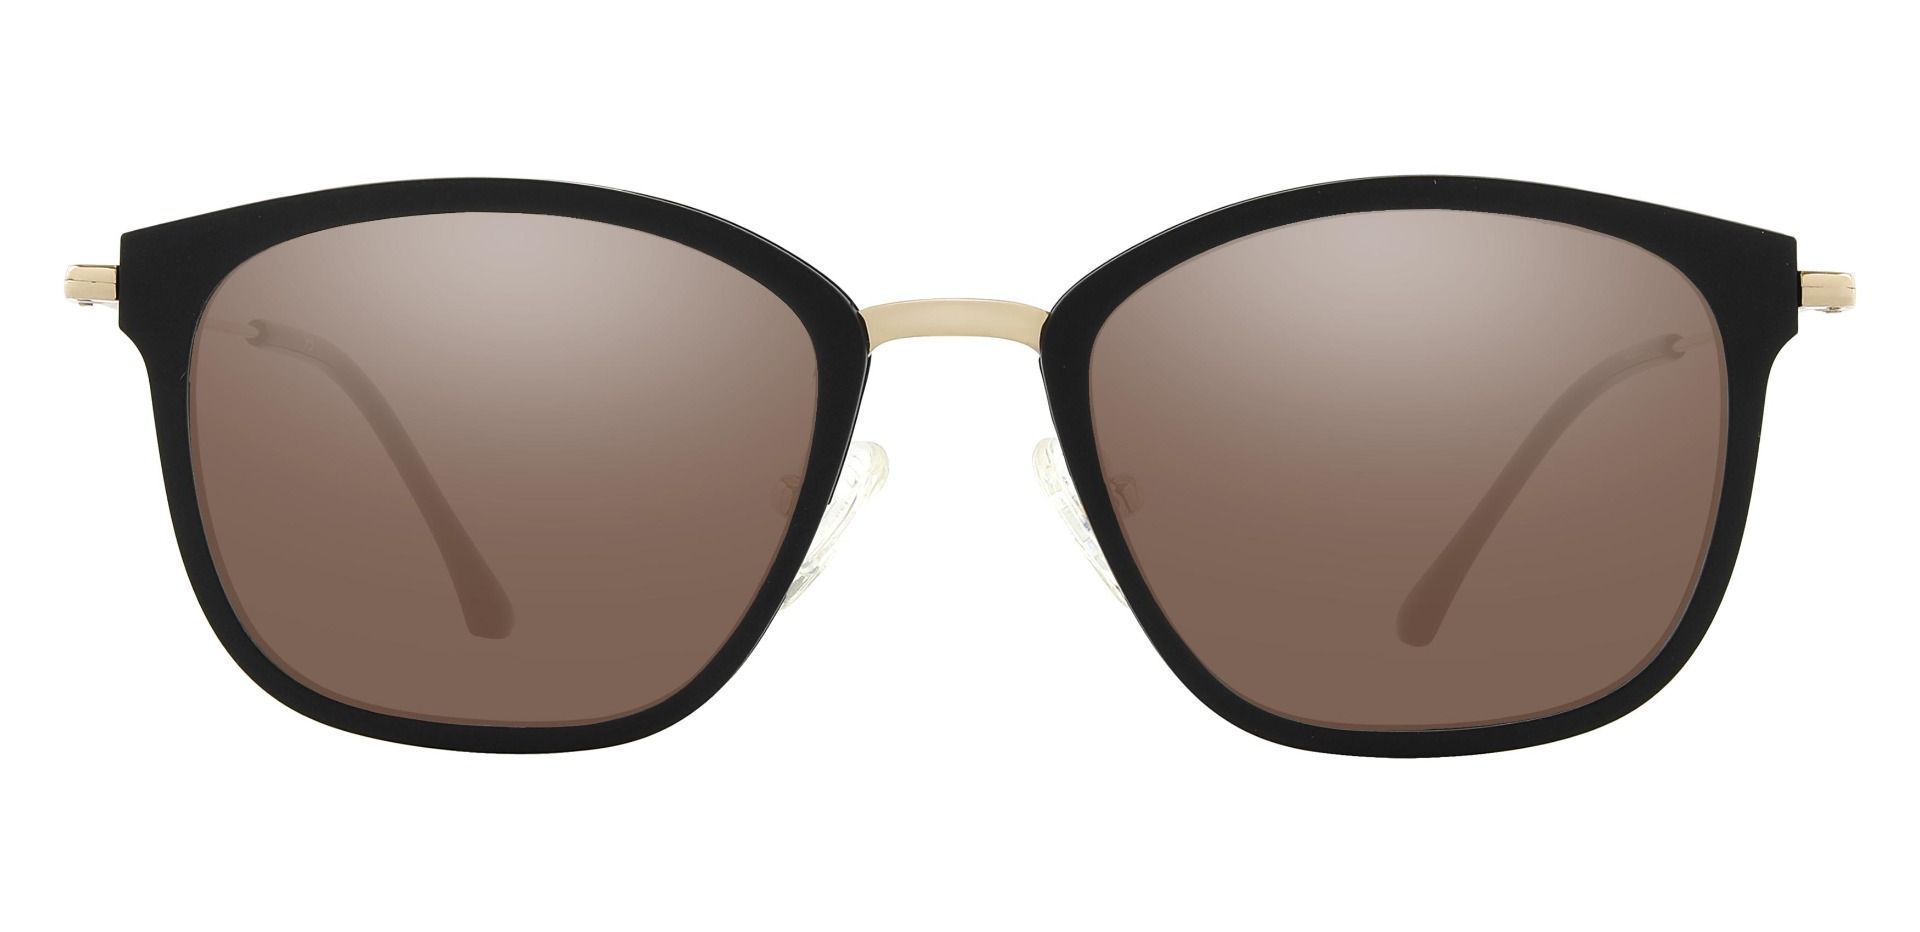 Brooklyn Square Prescription Sunglasses - Black Frame With Brown Lenses